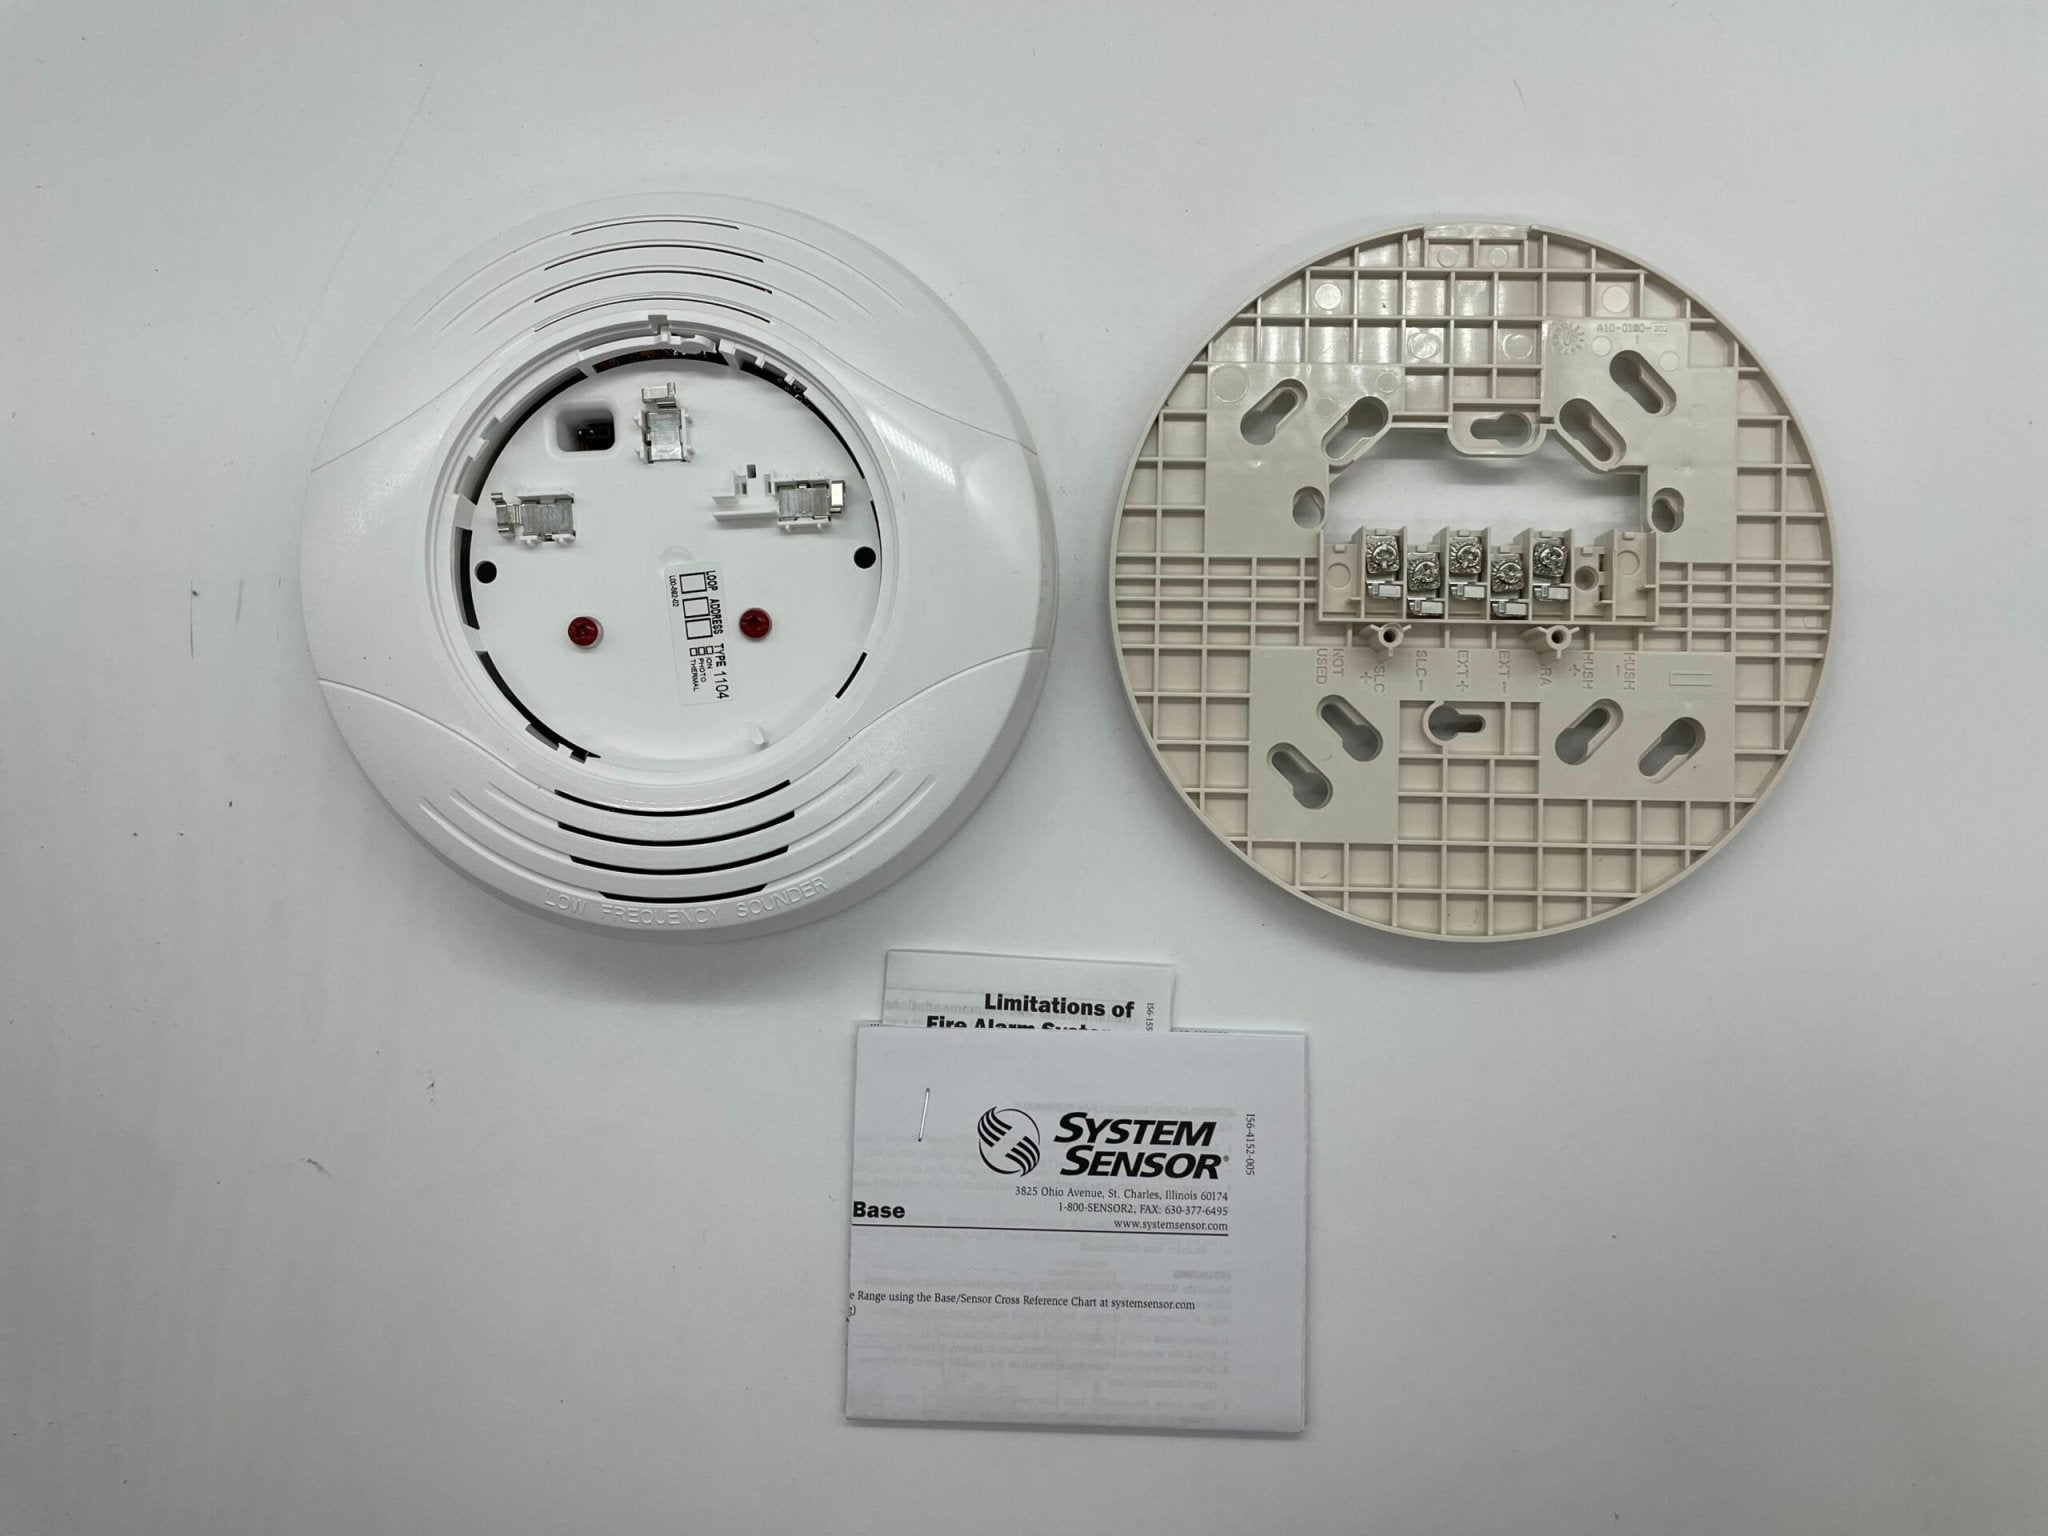 System Sensor B200SR-LF-WH - The Fire Alarm Supplier